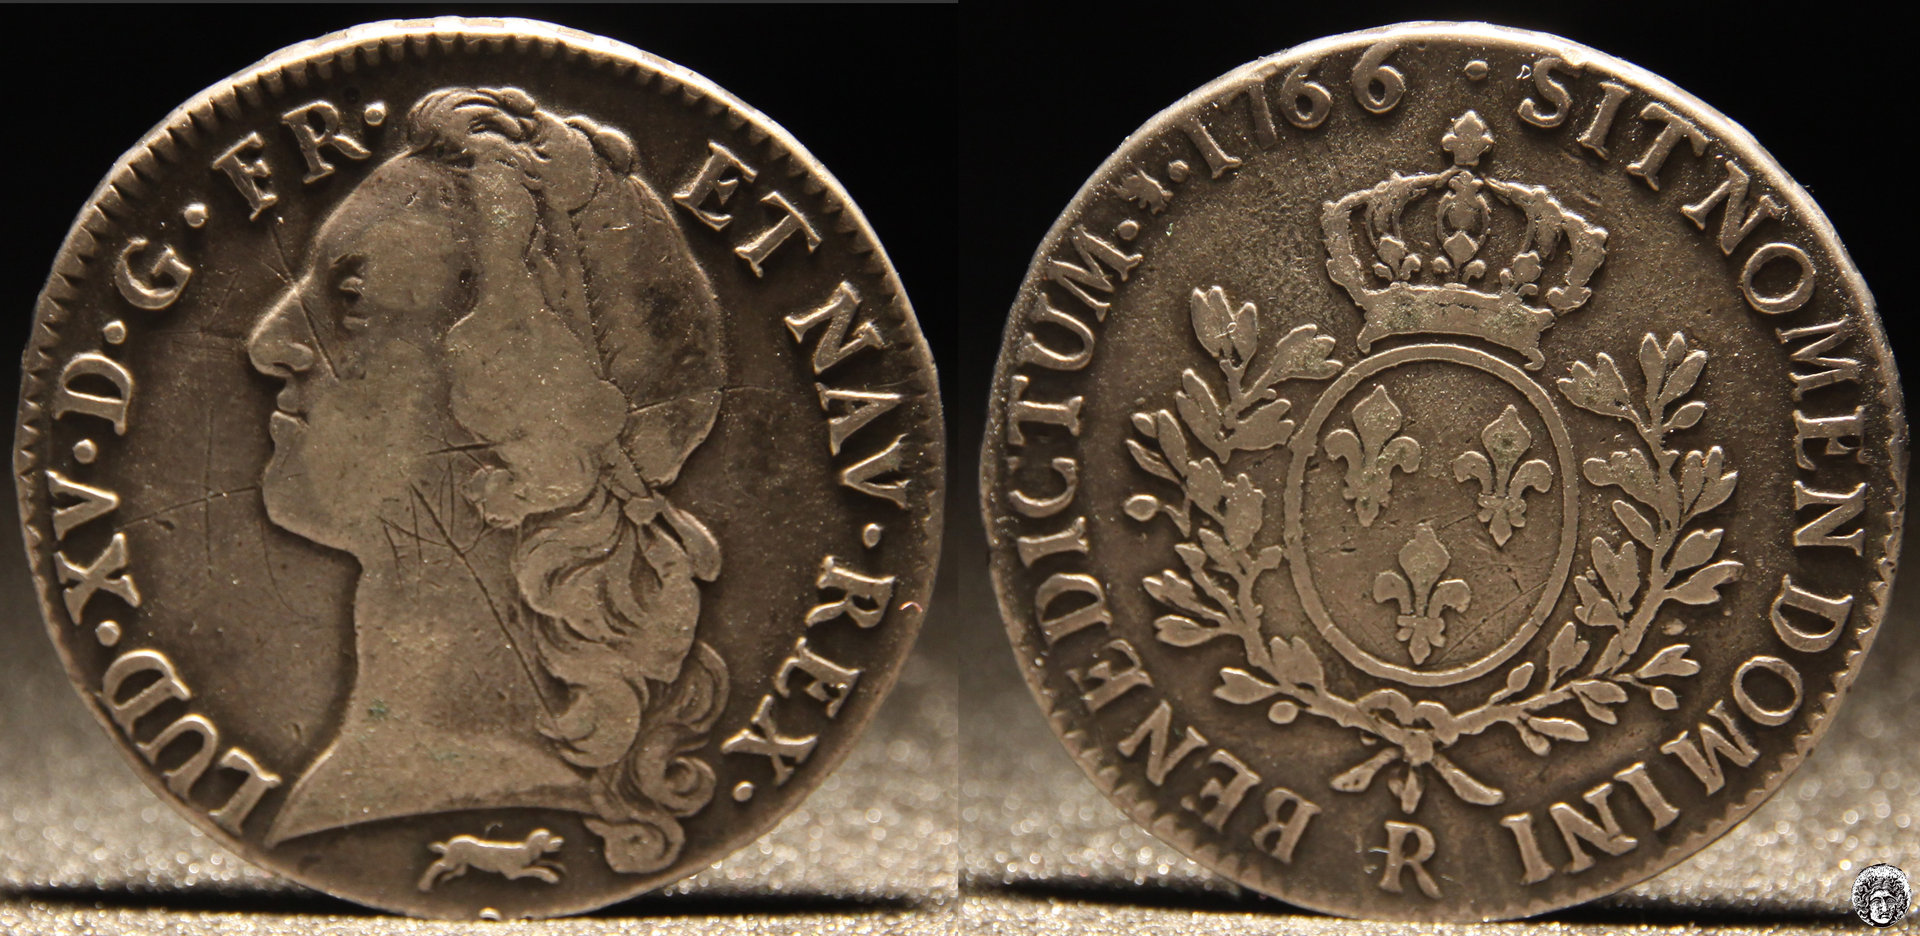 FRANCIA - FRANCE. 1 ECU DE 1766 R. ORLEANS. 28,78 gr. AG.